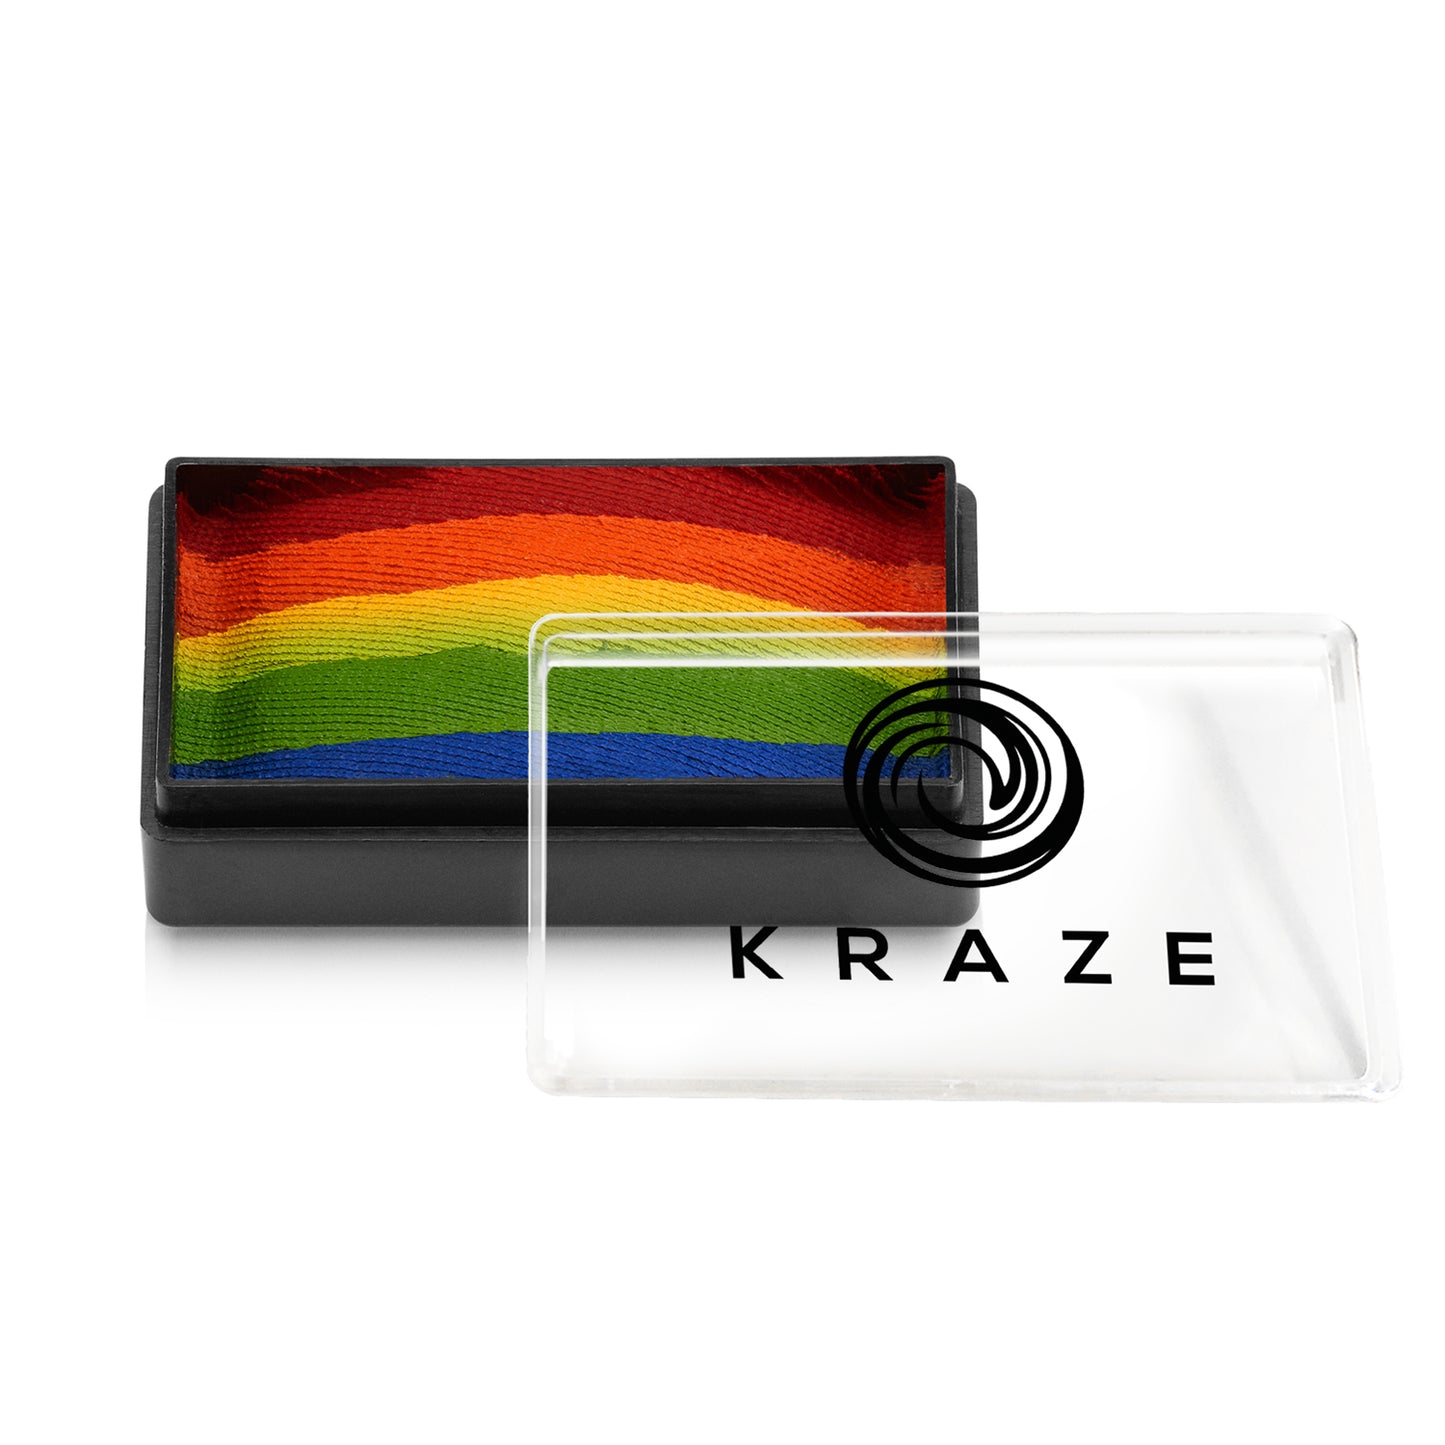 Kraze FX Domed 1 Stroke Cake - Really Rainbow (25 gm)